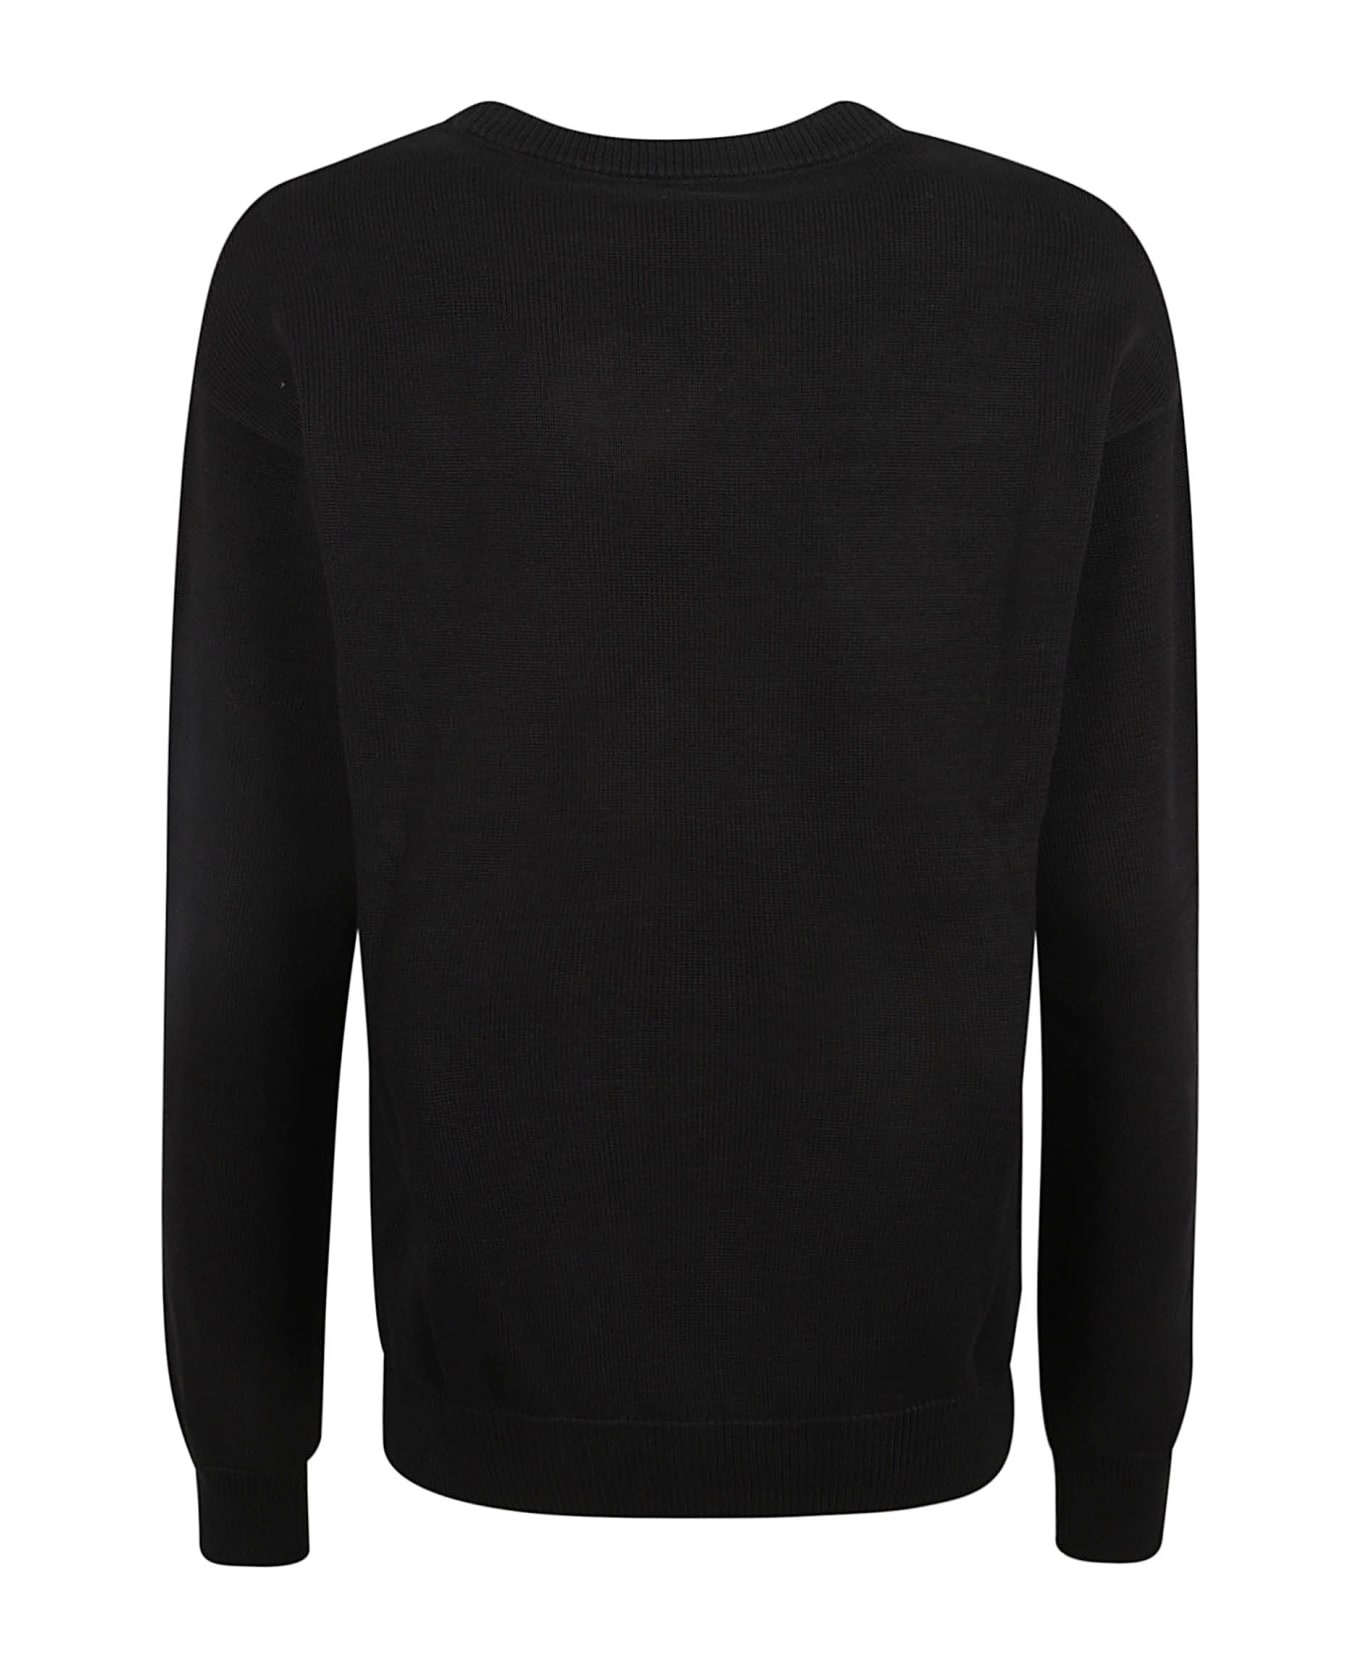 Moschino In Love We Trust Sweatshirt - Black